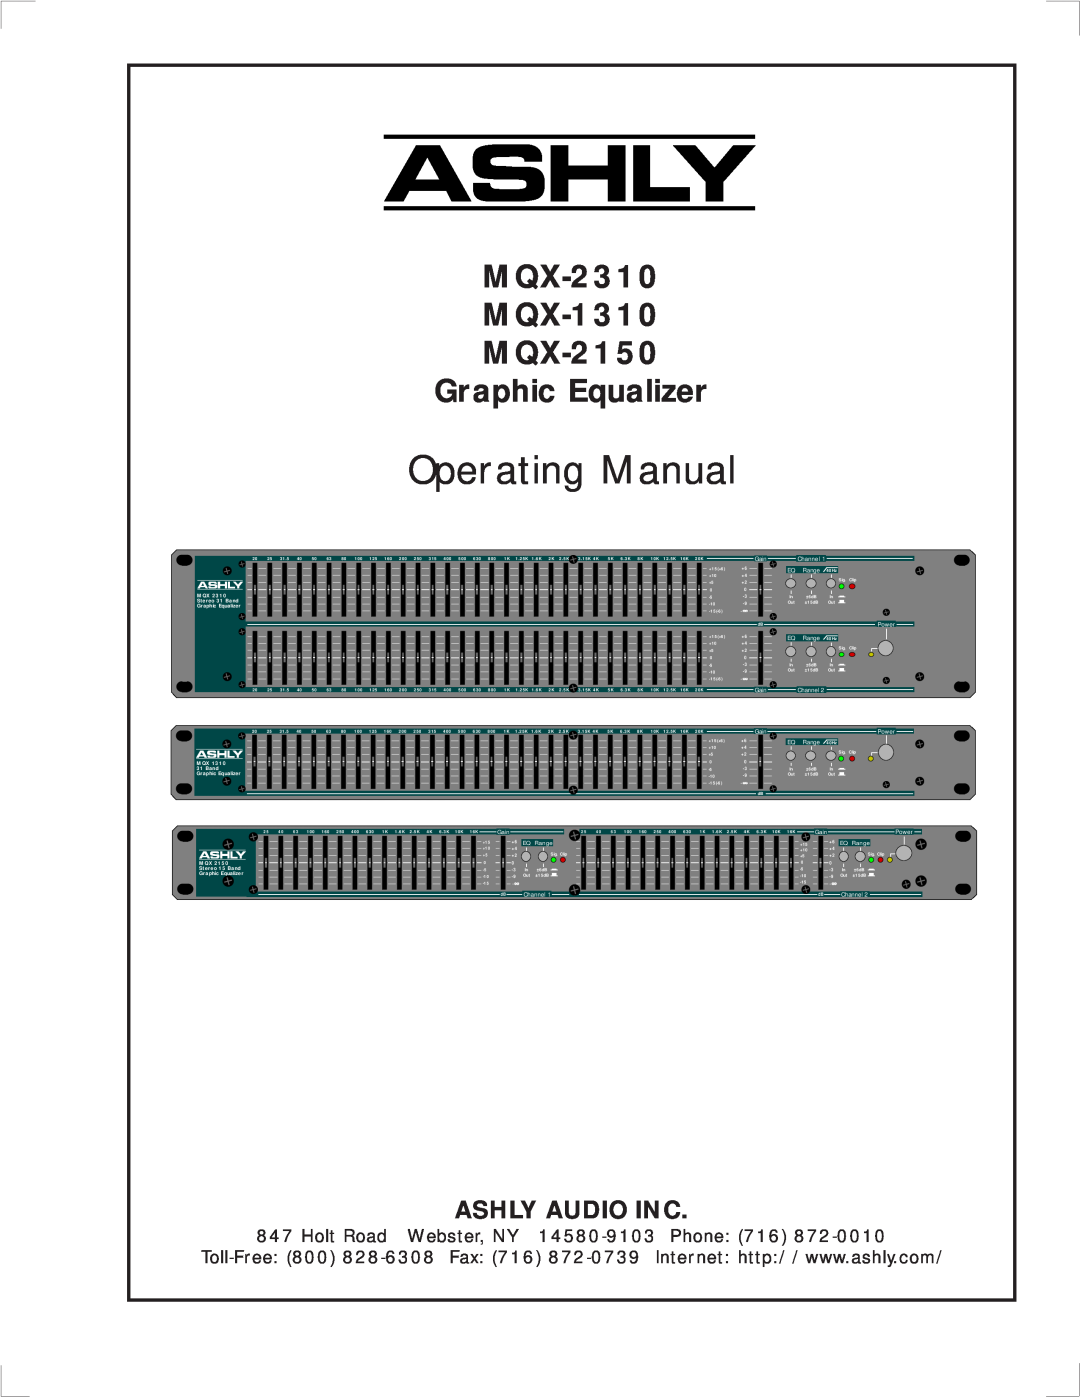 Ashly MQX-2310 manual Operating Manual, MQX-1310, MQX-2150, Graphic Equalizer, Ashly Audio Inc, Holt Road, Webster, NY 